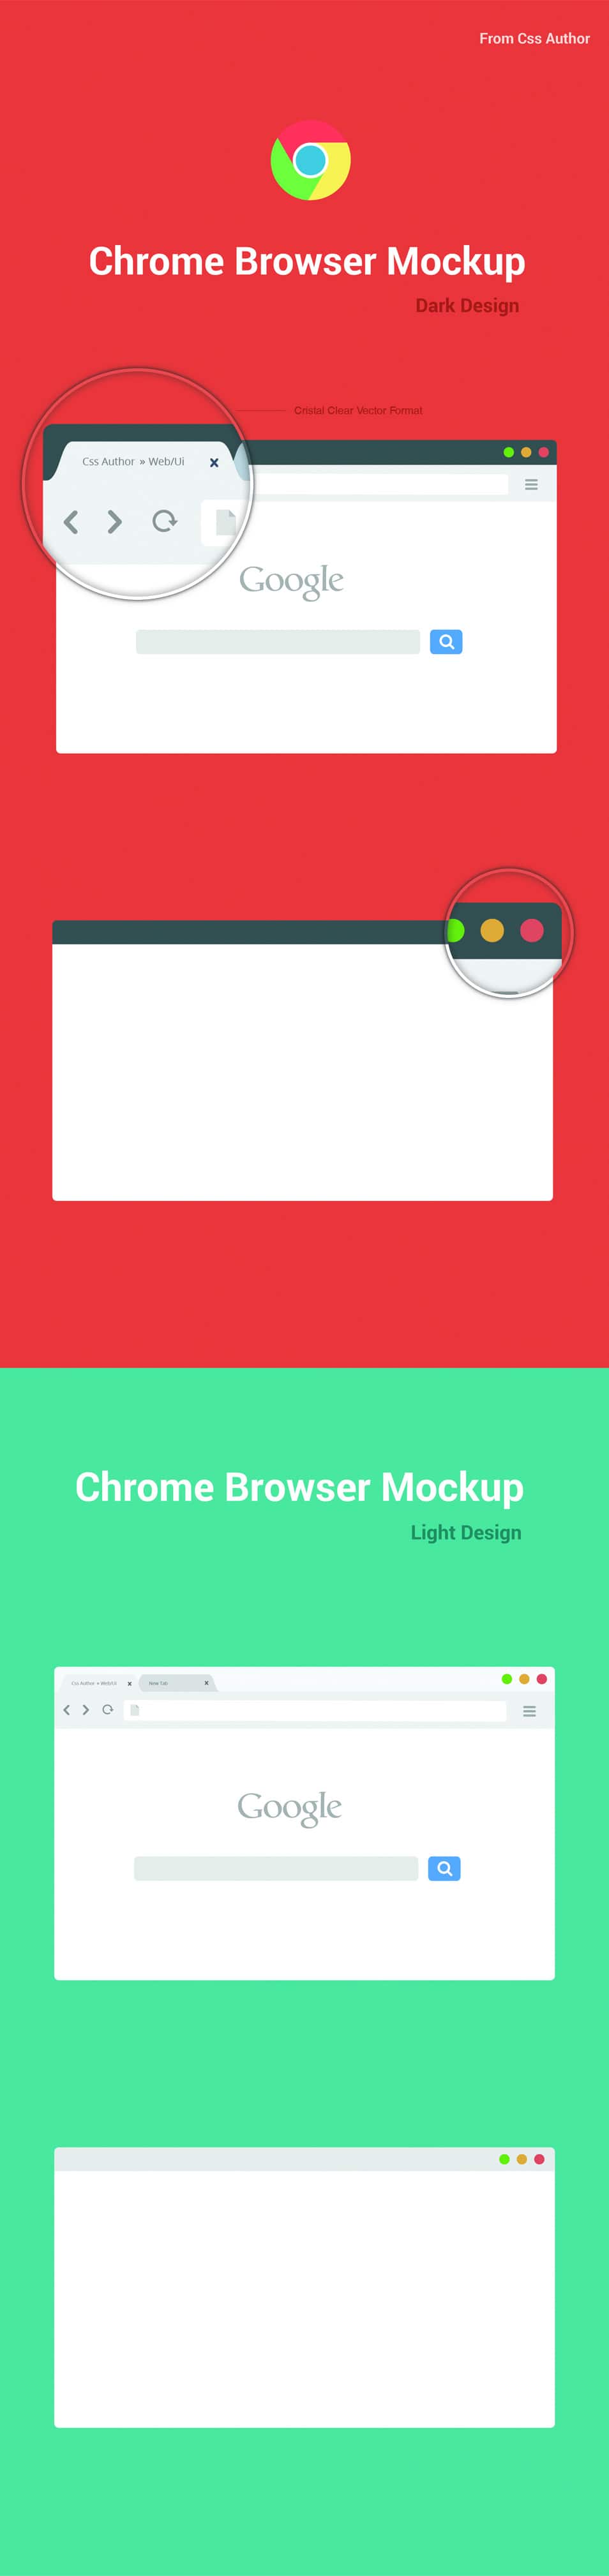 Free Chrome Browser Mockup Vector